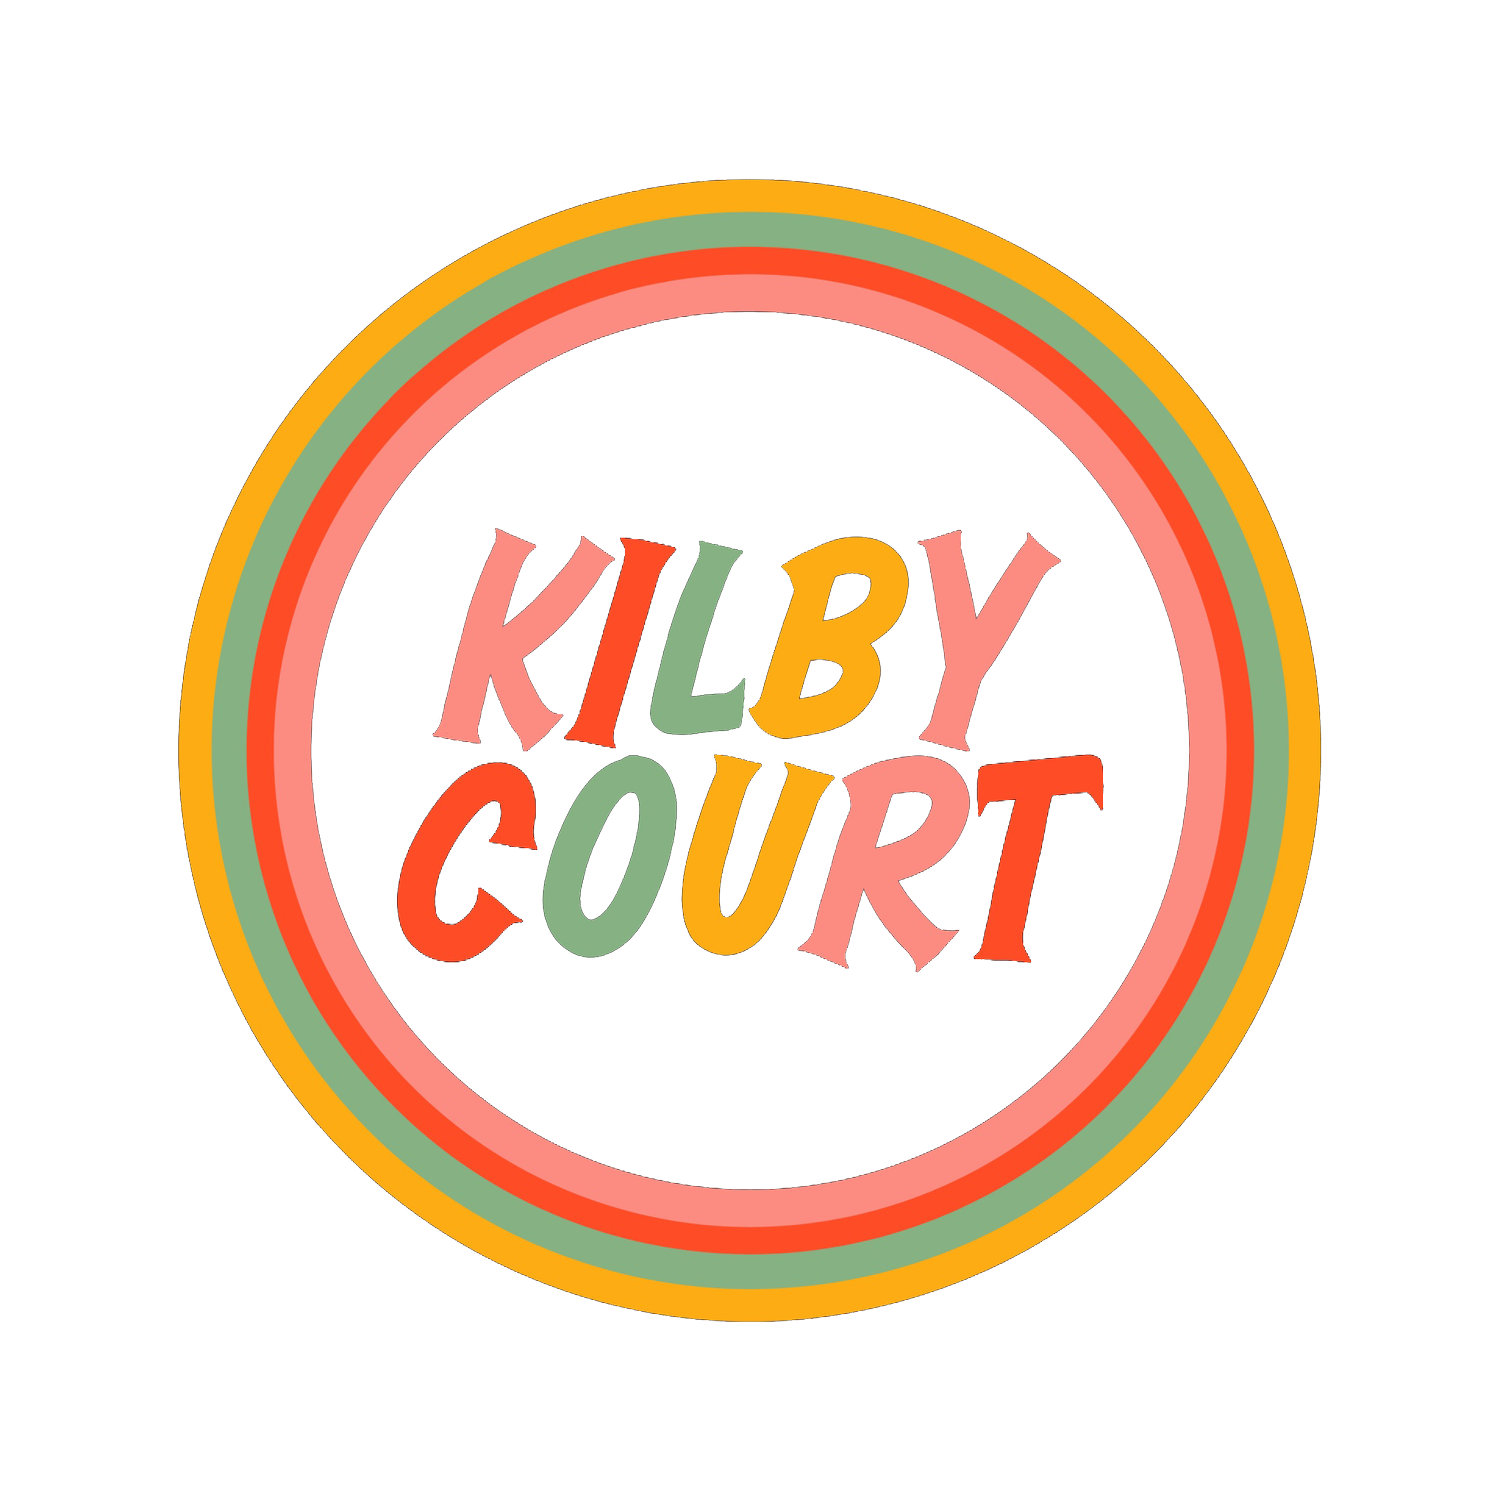 Kilby Court